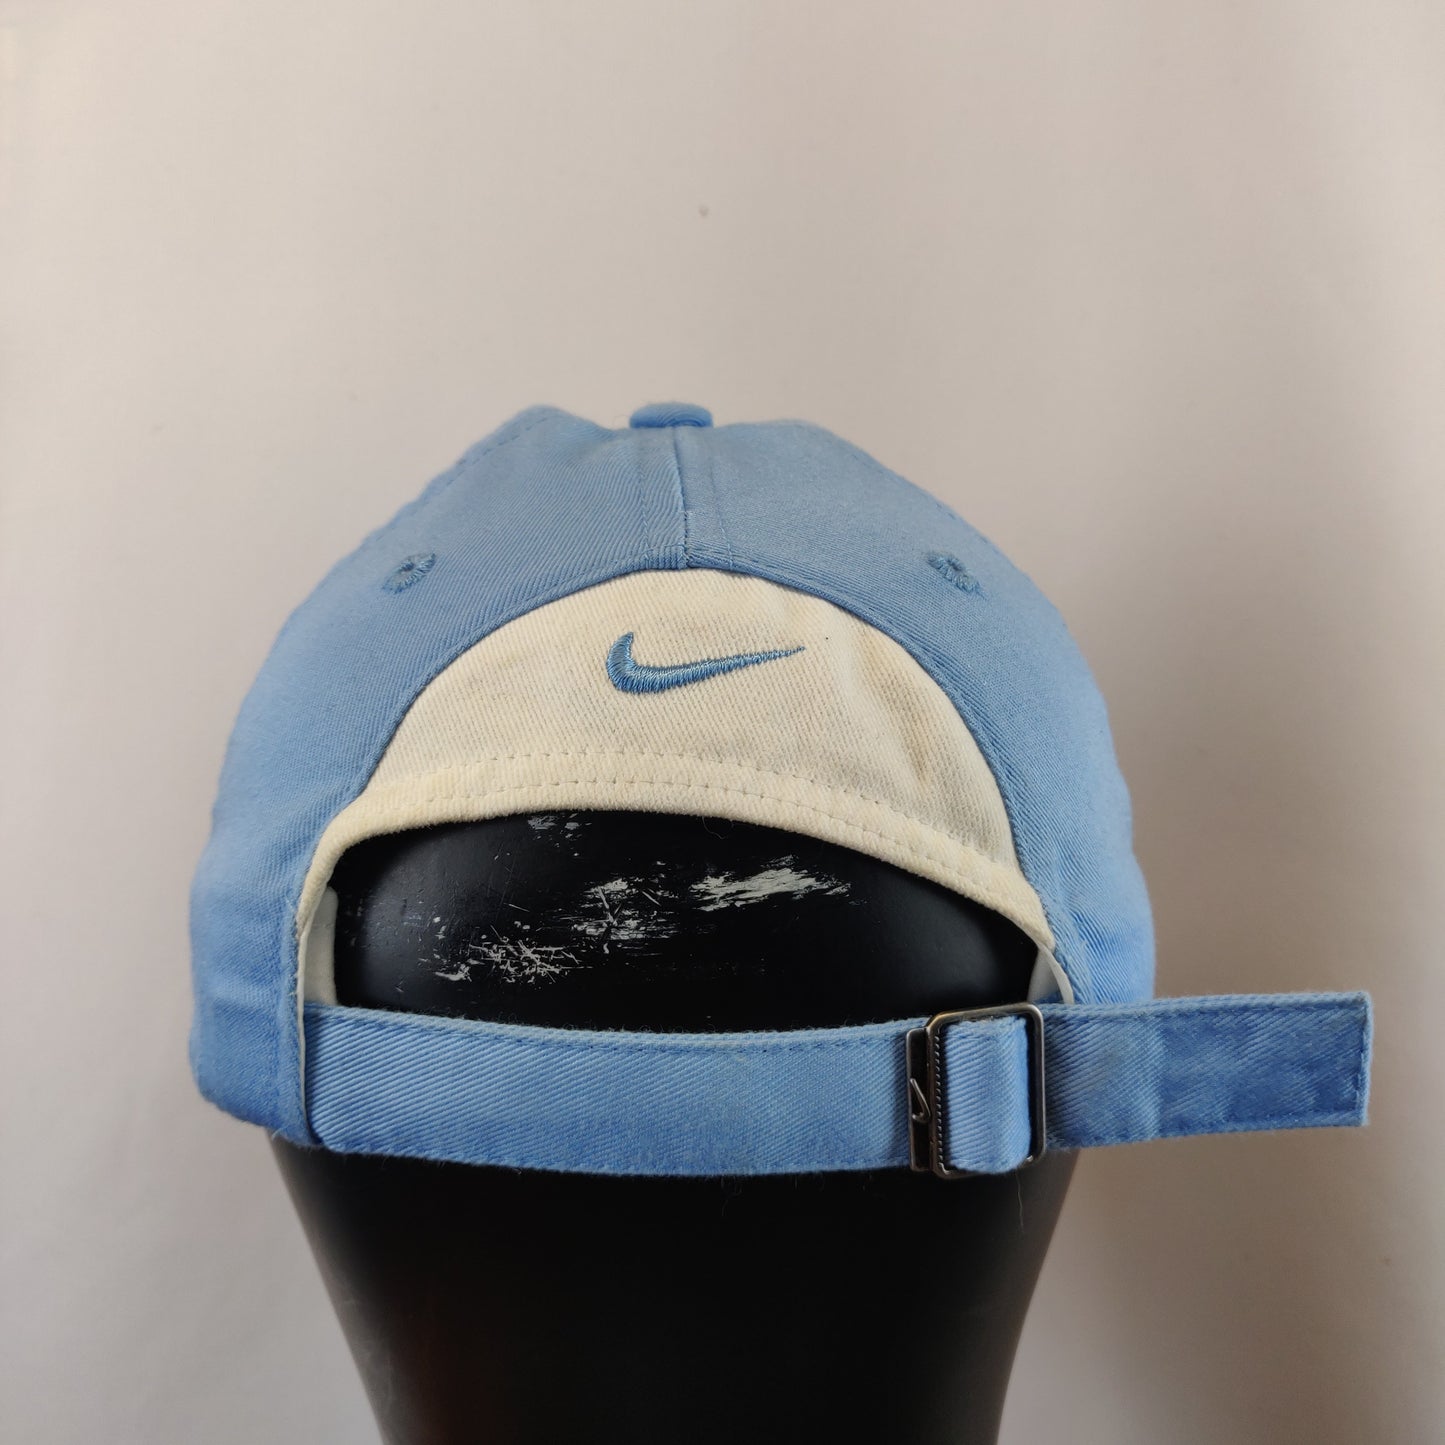 Nike Tiger Woods Rare 2 Tone Swoosh Blue White Golf Hat Cap Men Unisex